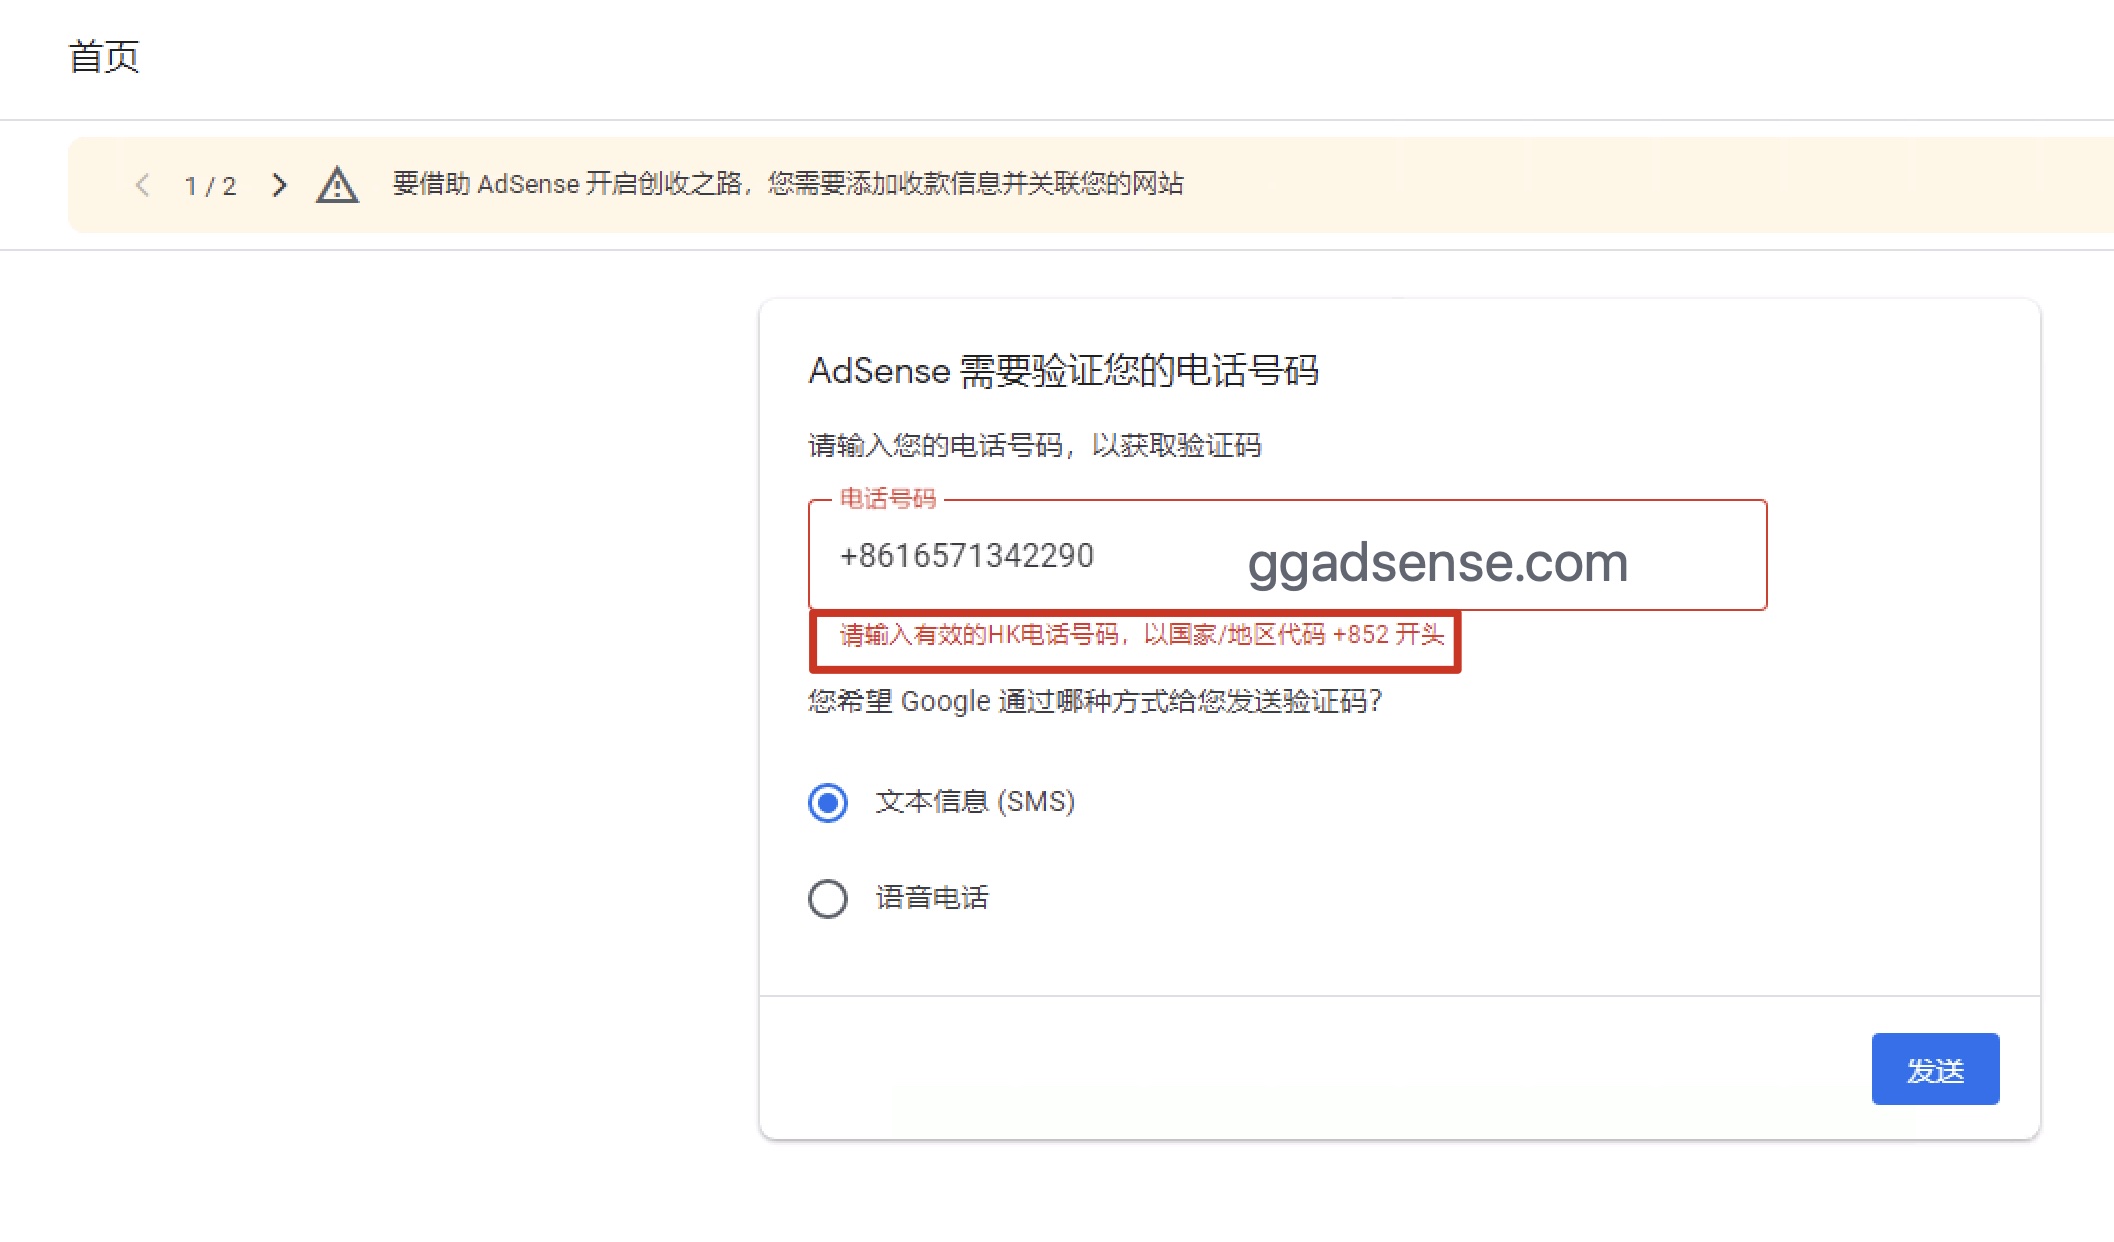 adsense/admob需要验证您的电话号码，请输入有效的HK电话号码